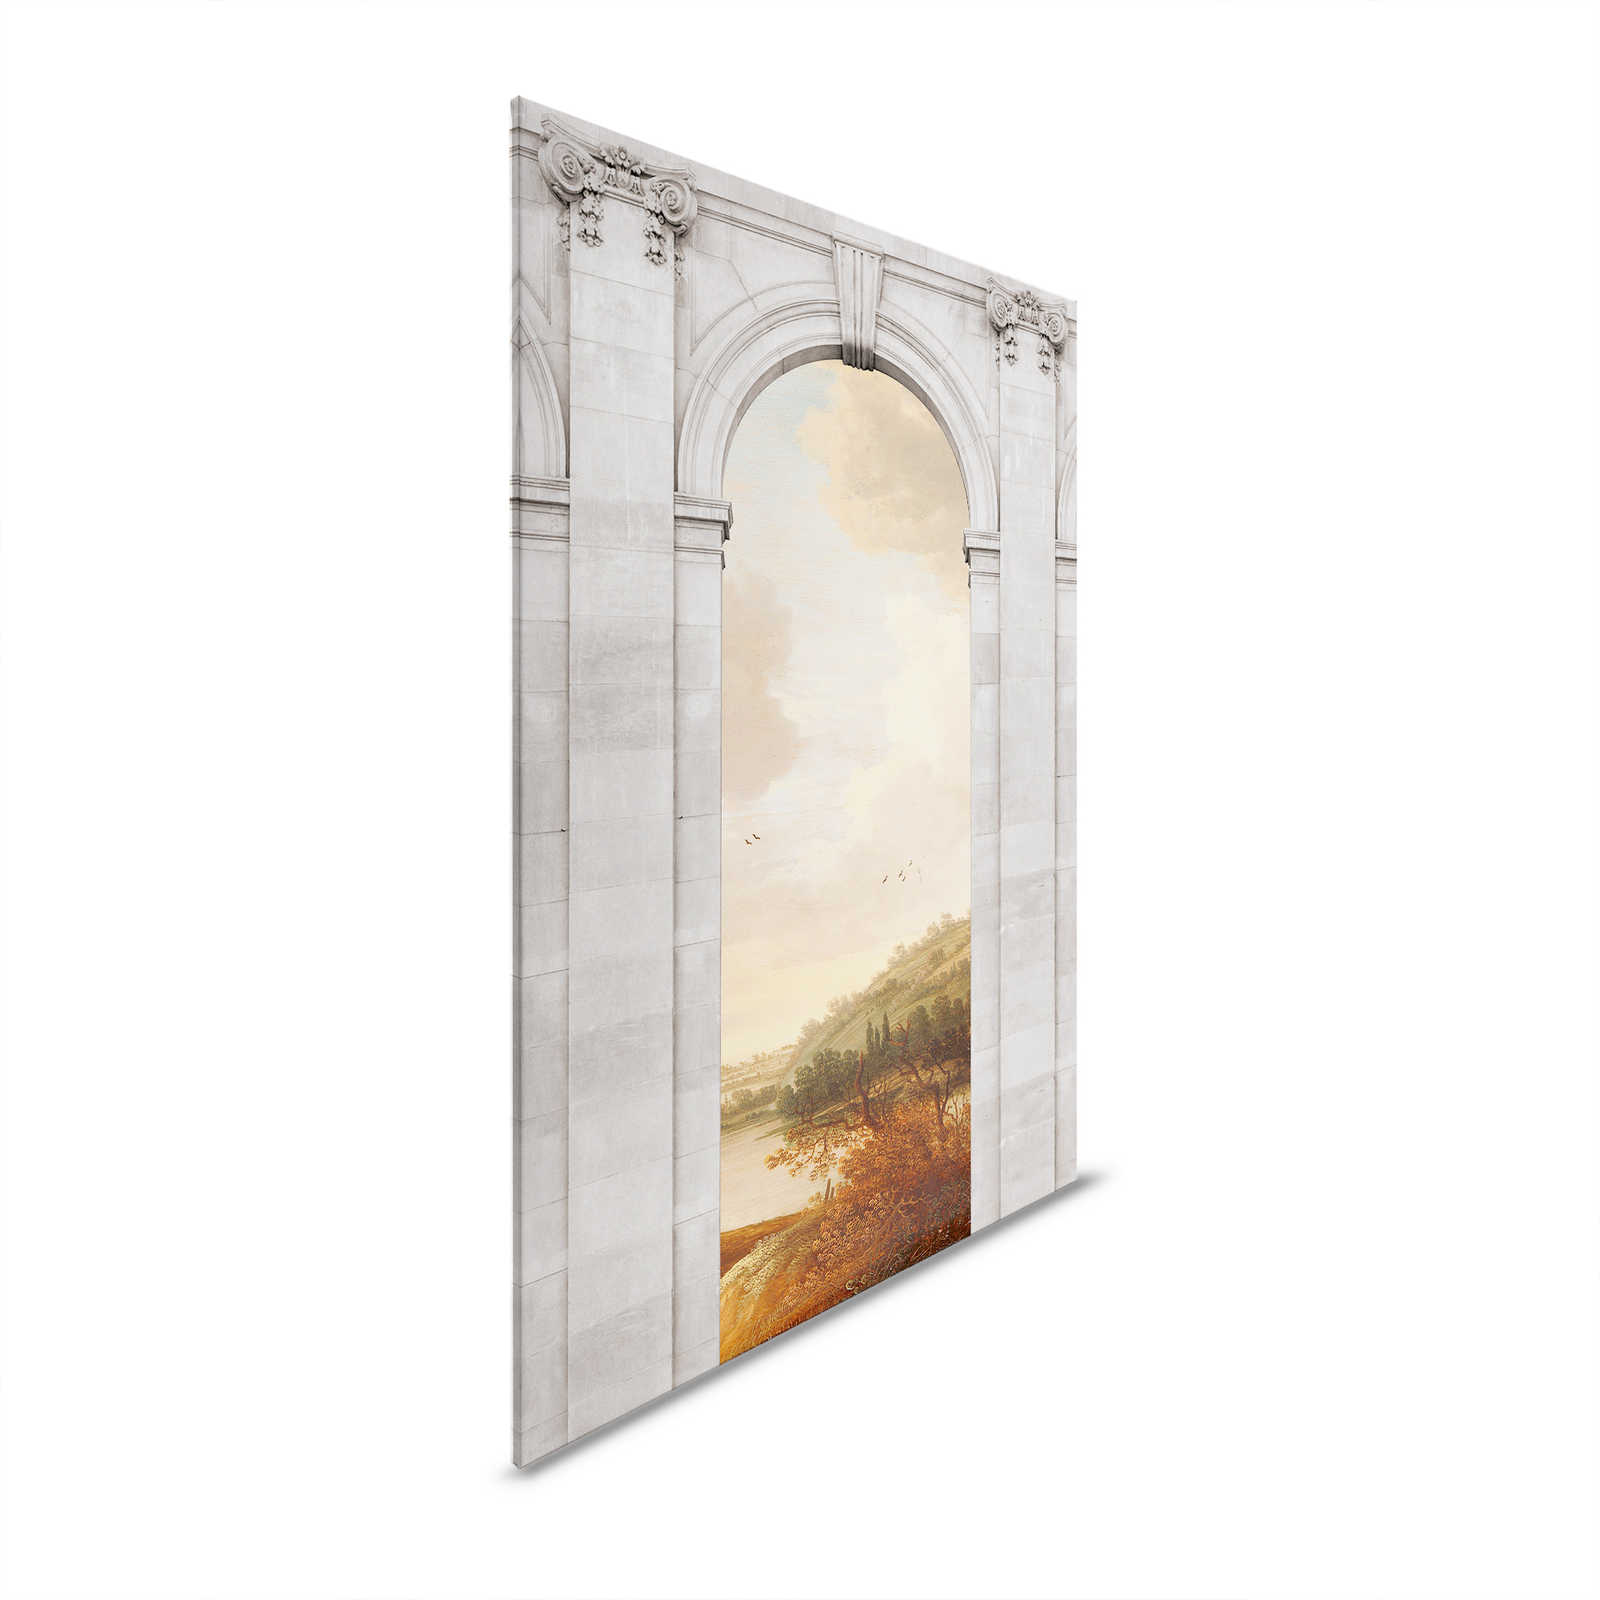 Castello 1 - Pintura en lienzo Paisaje y Arquitectura de Arco - 1,20 m x 0,80 m
